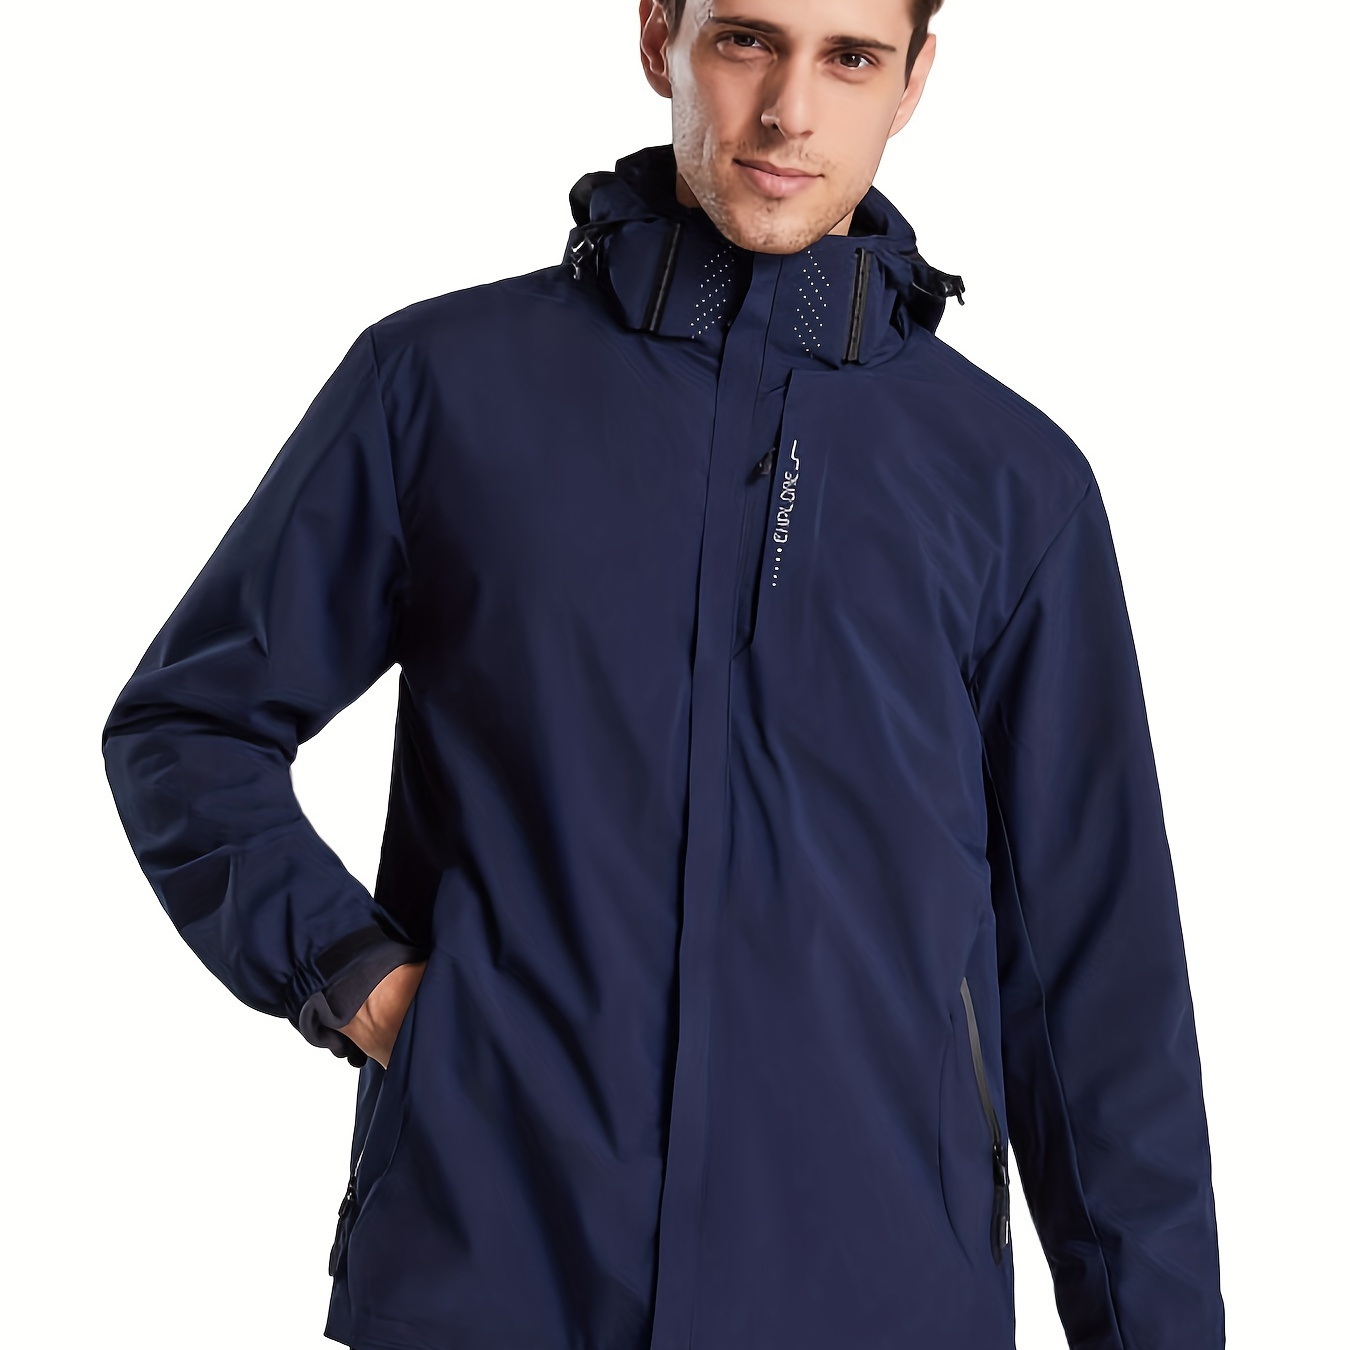 

Men's Lightweight Waterproof Rain Jacket, Shell Hooded Outdoor Raincoat Hiking Windbreake Jacket Sweatshirts